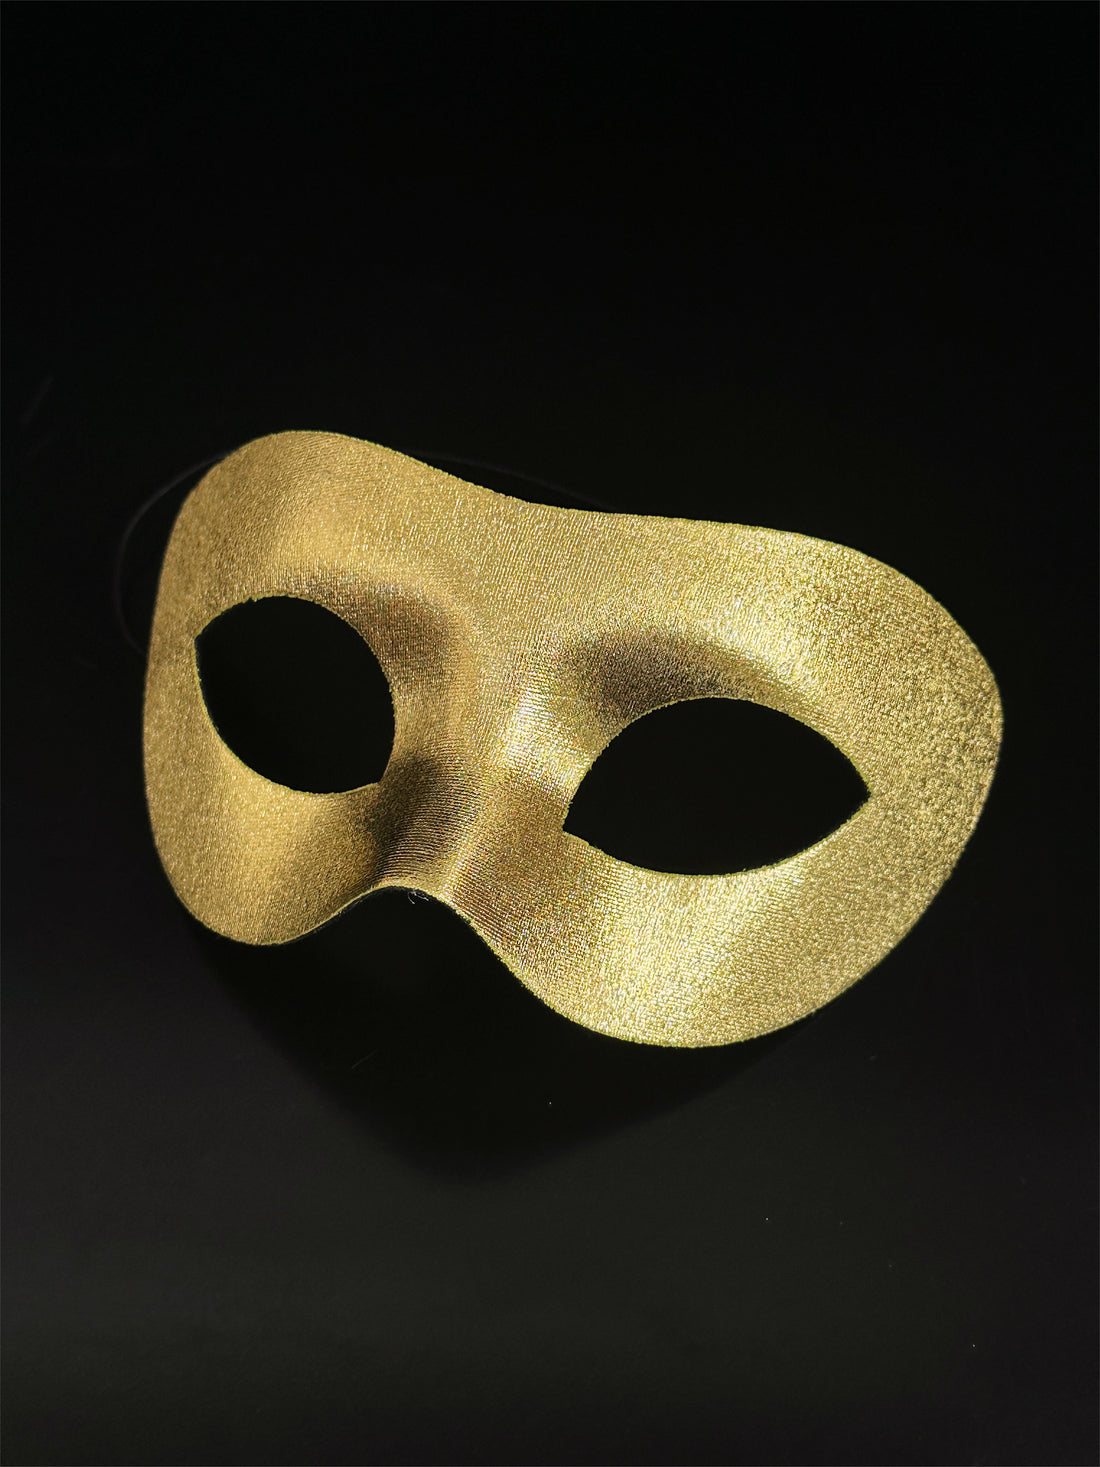 Gold masquerade masks in bulk.